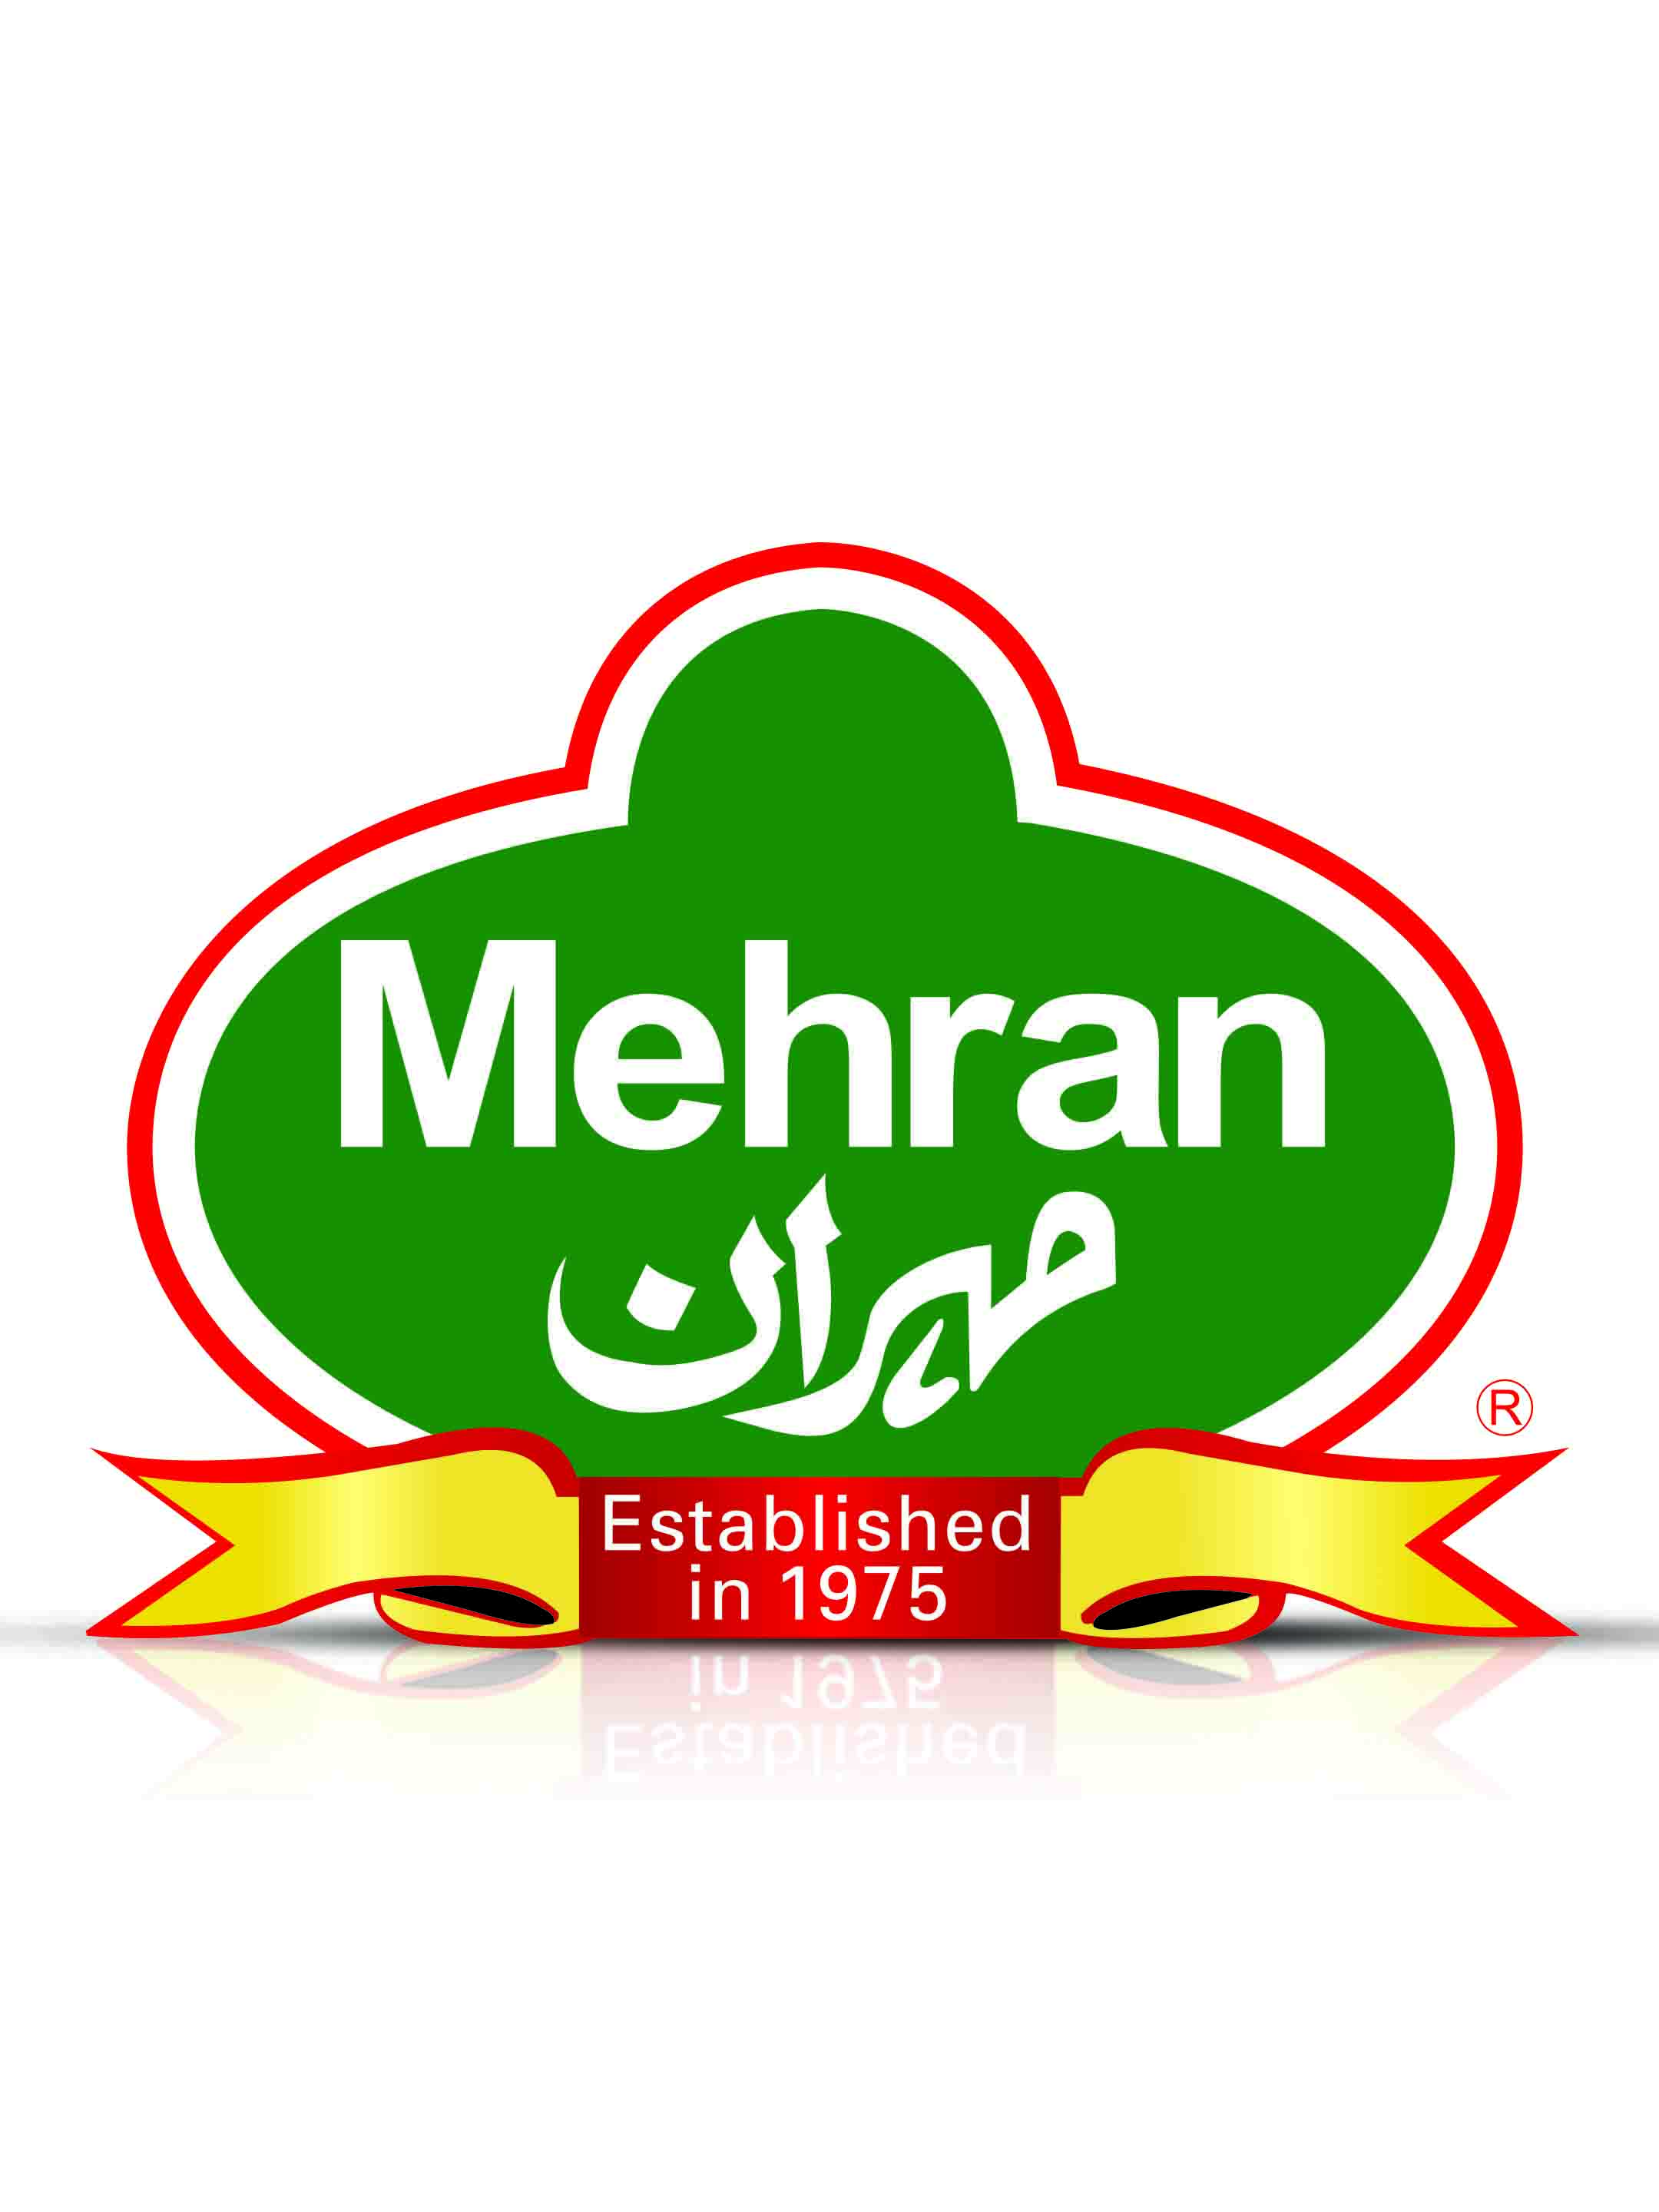 Mehran spice and Food Industries